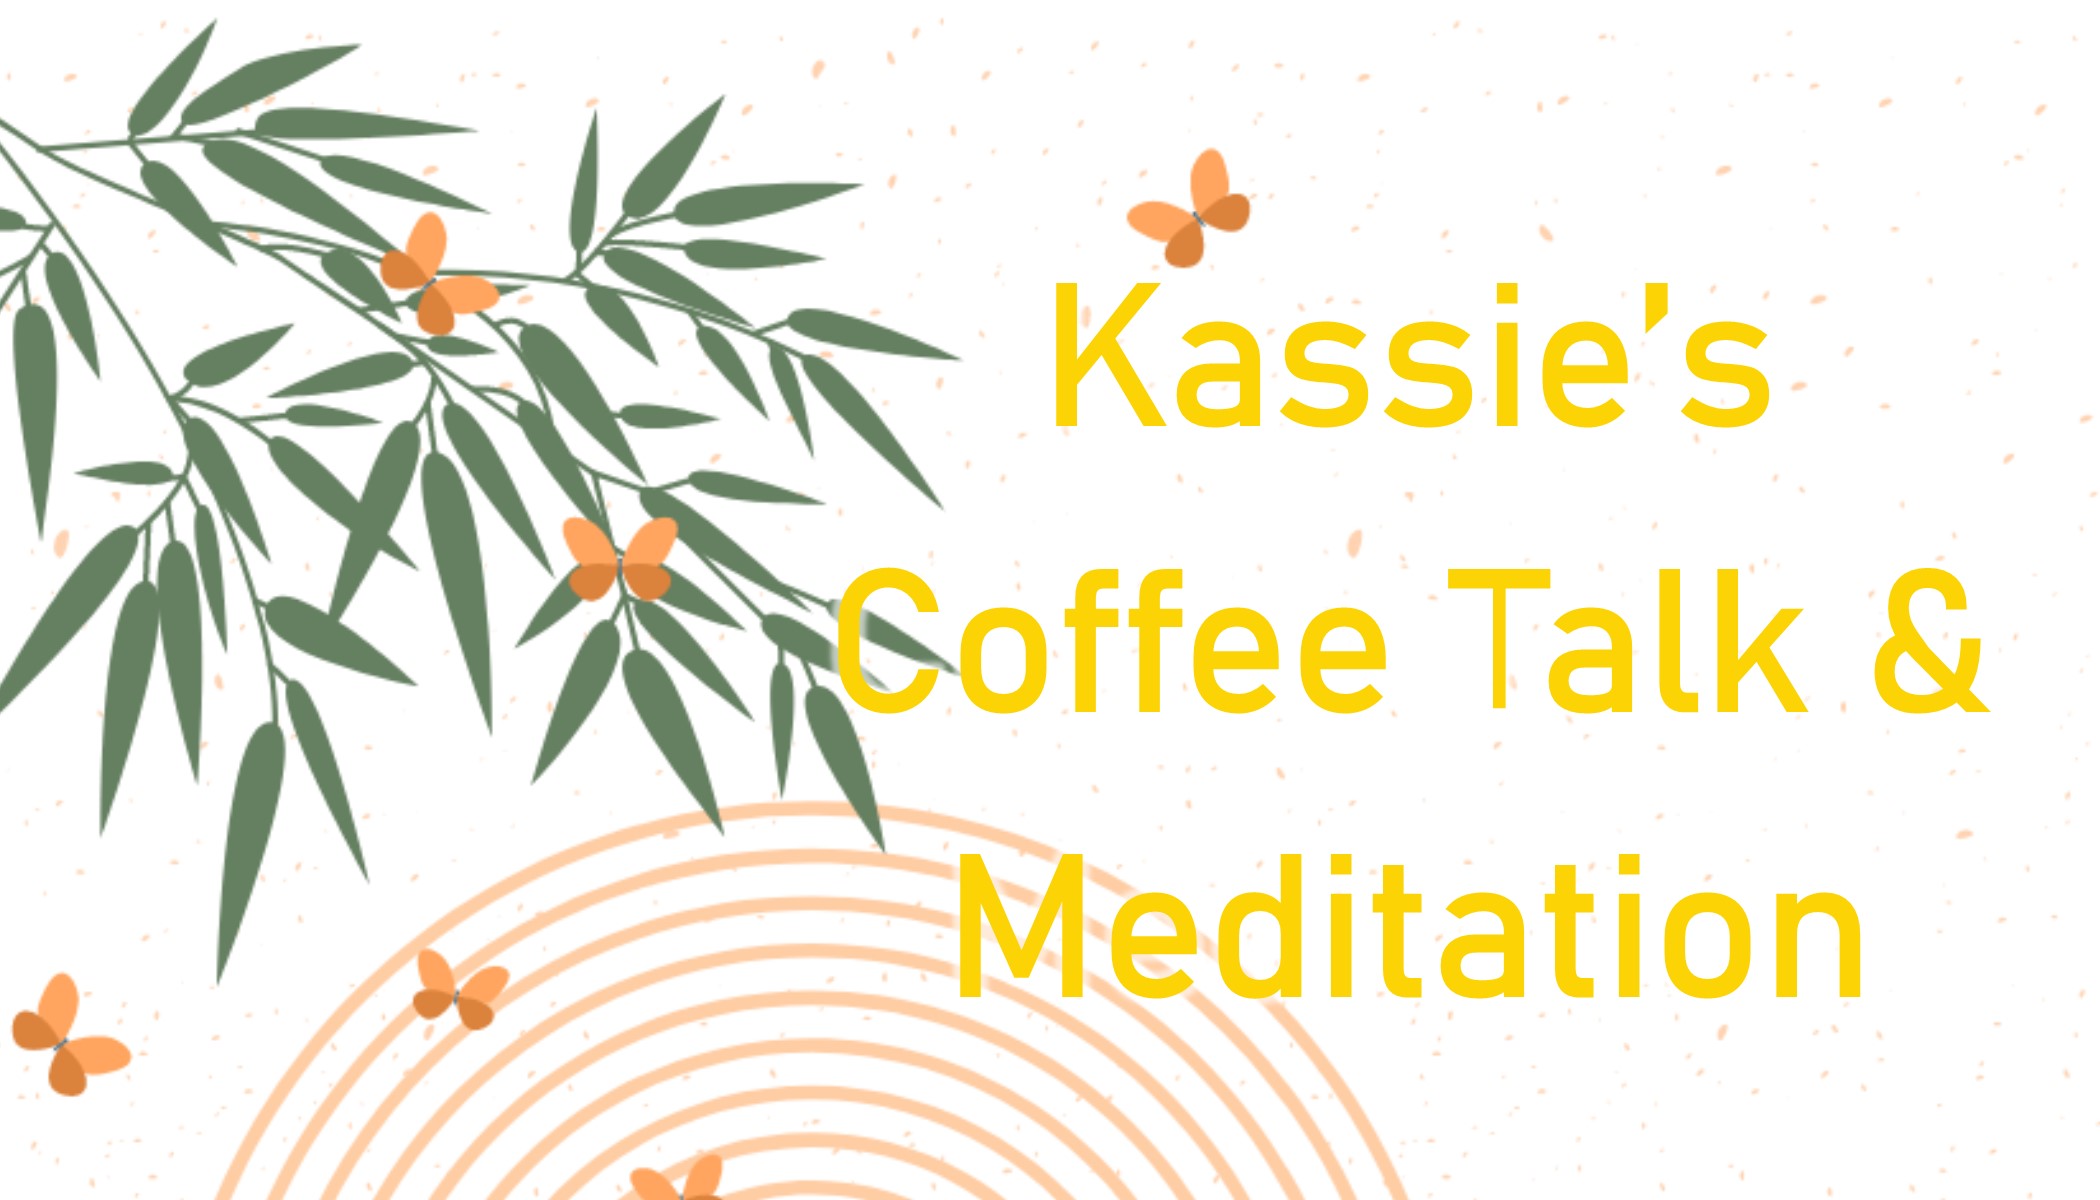 Kassie's Coffee Talk and Meditation